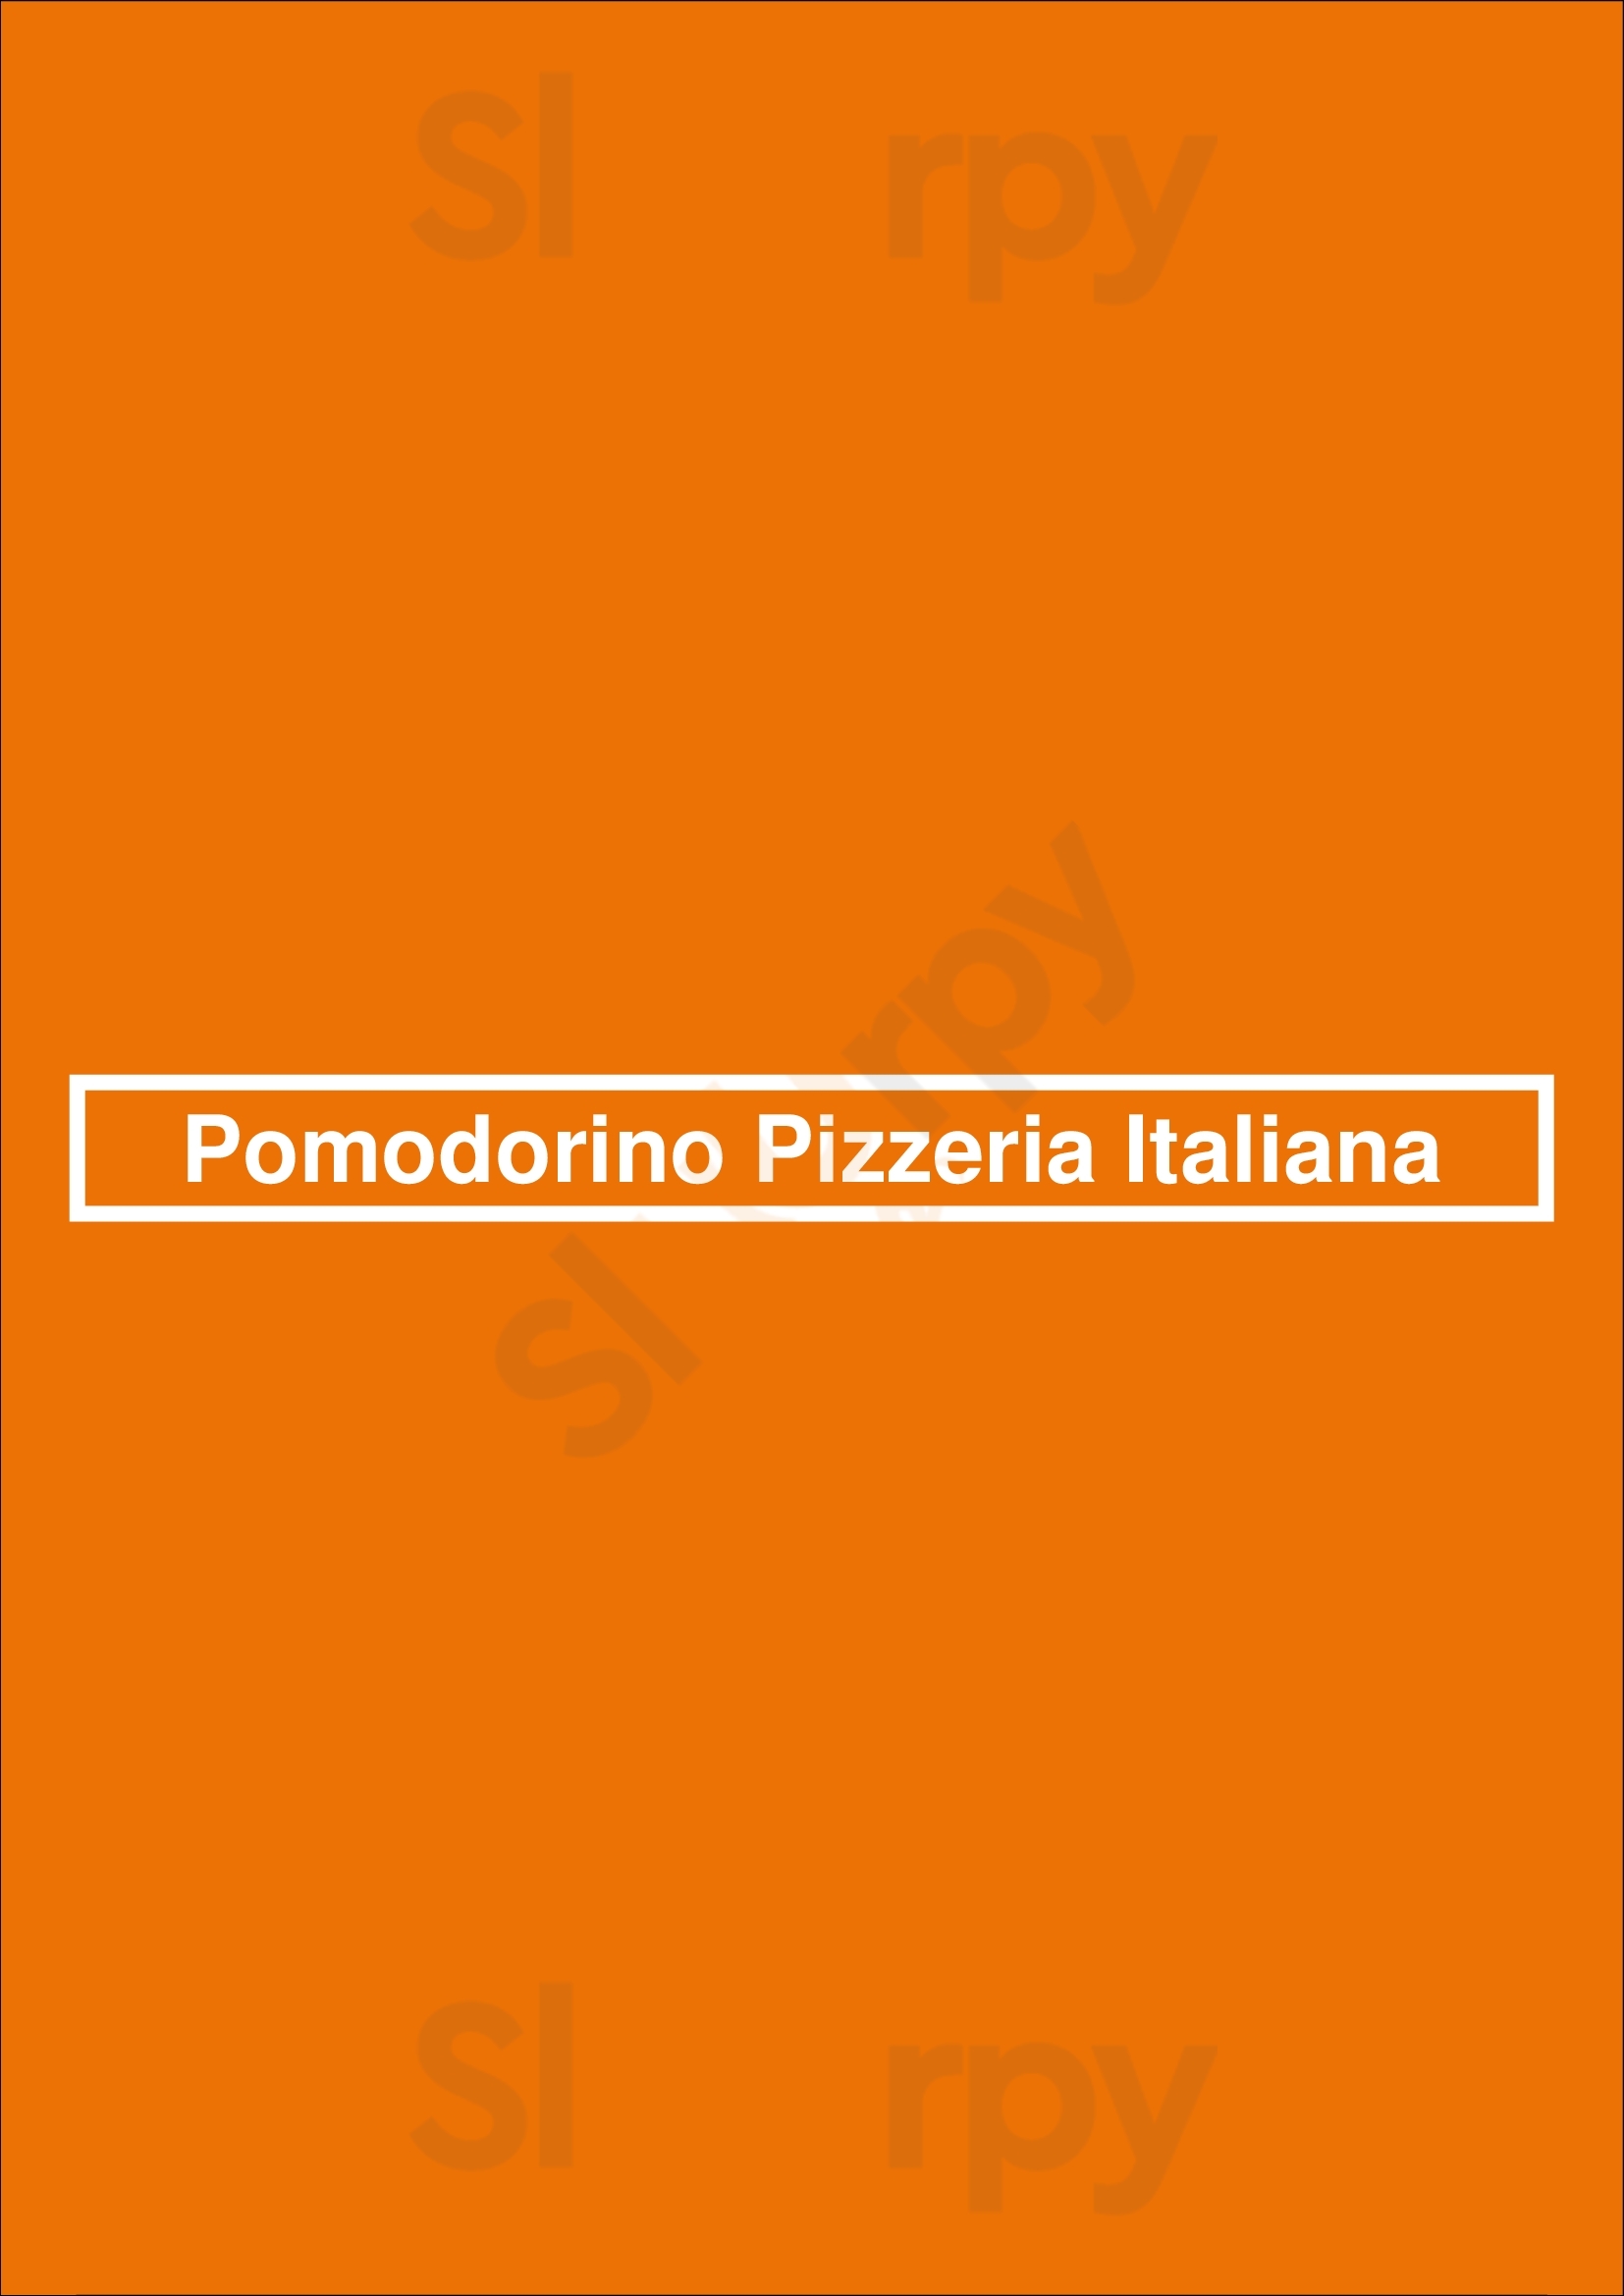 Pomodorino Pizzeria Italiana Marrickville Menu - 1